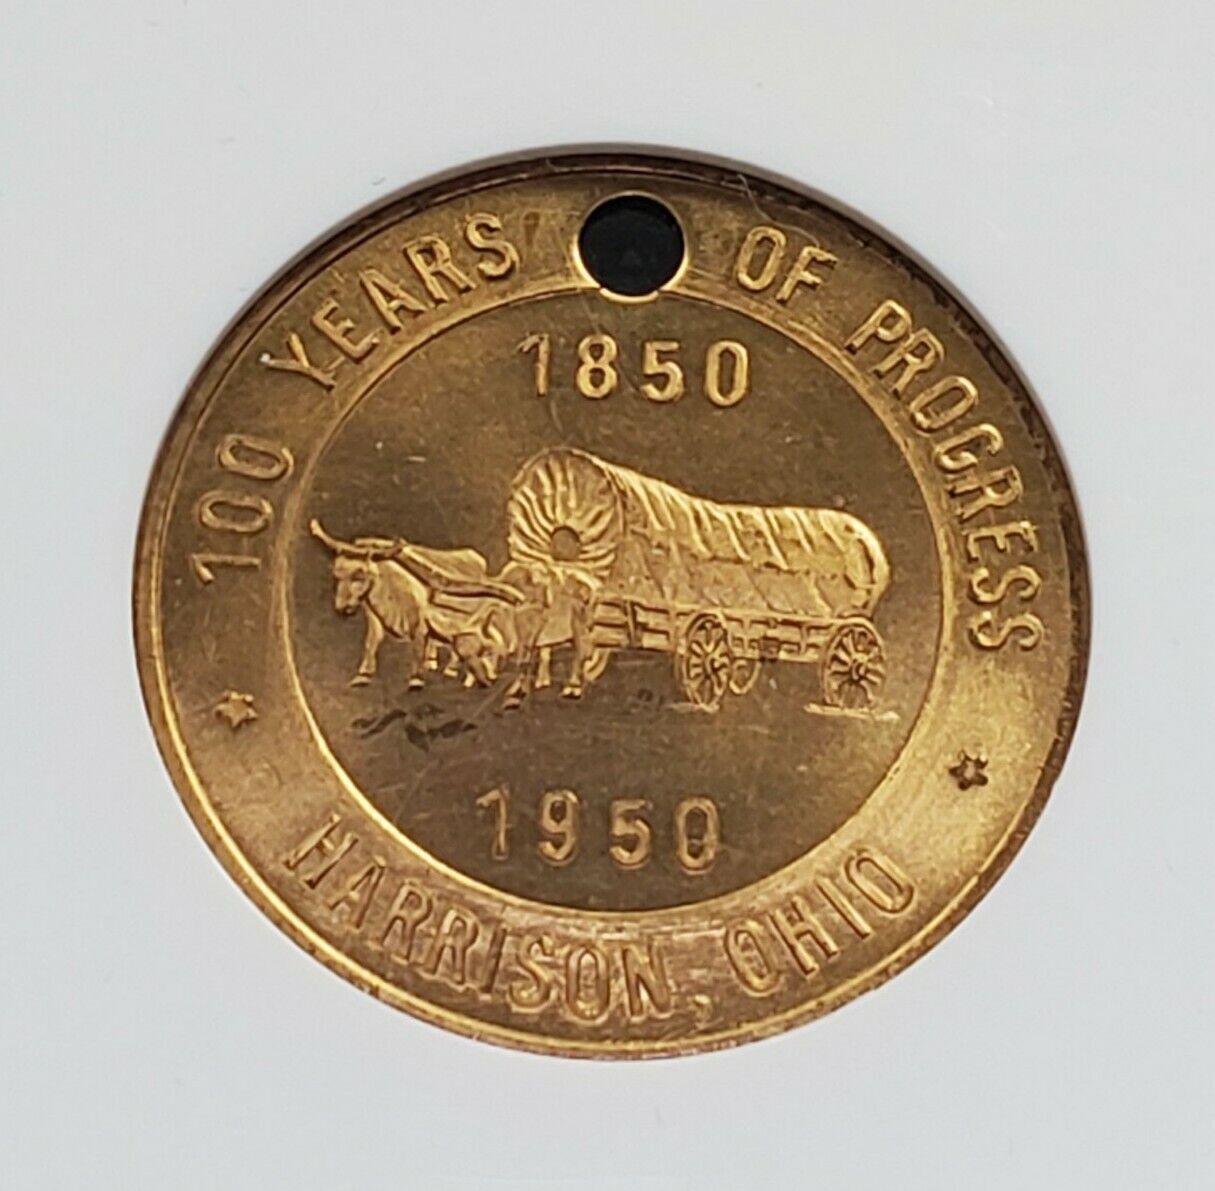 1850 - 1950 Hamilton County Harrison City Ohio Centennial Medal NGC MS65